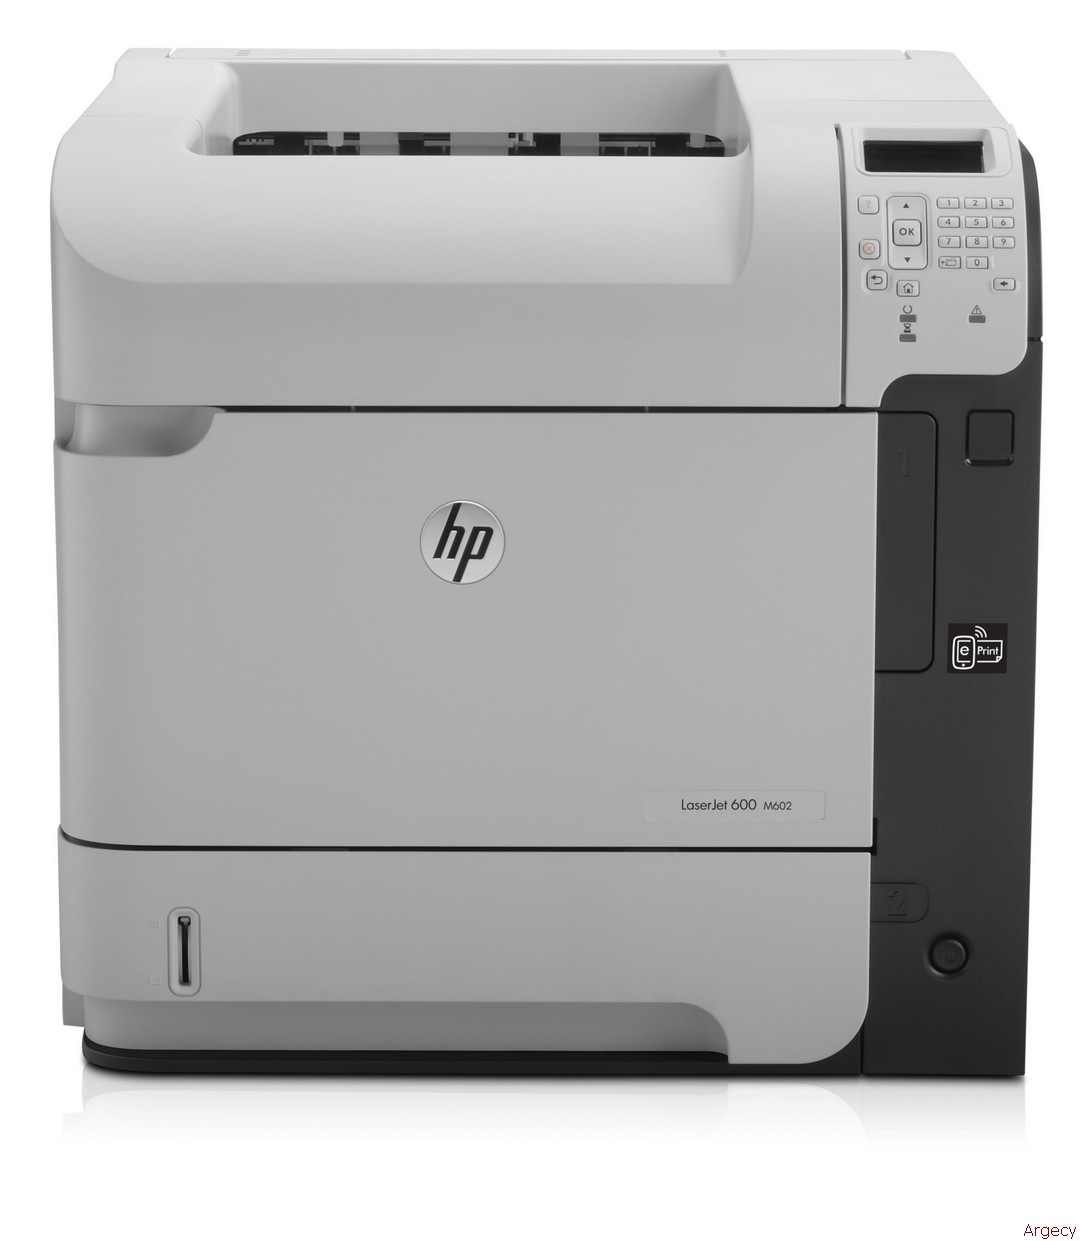 HP M602 Printer